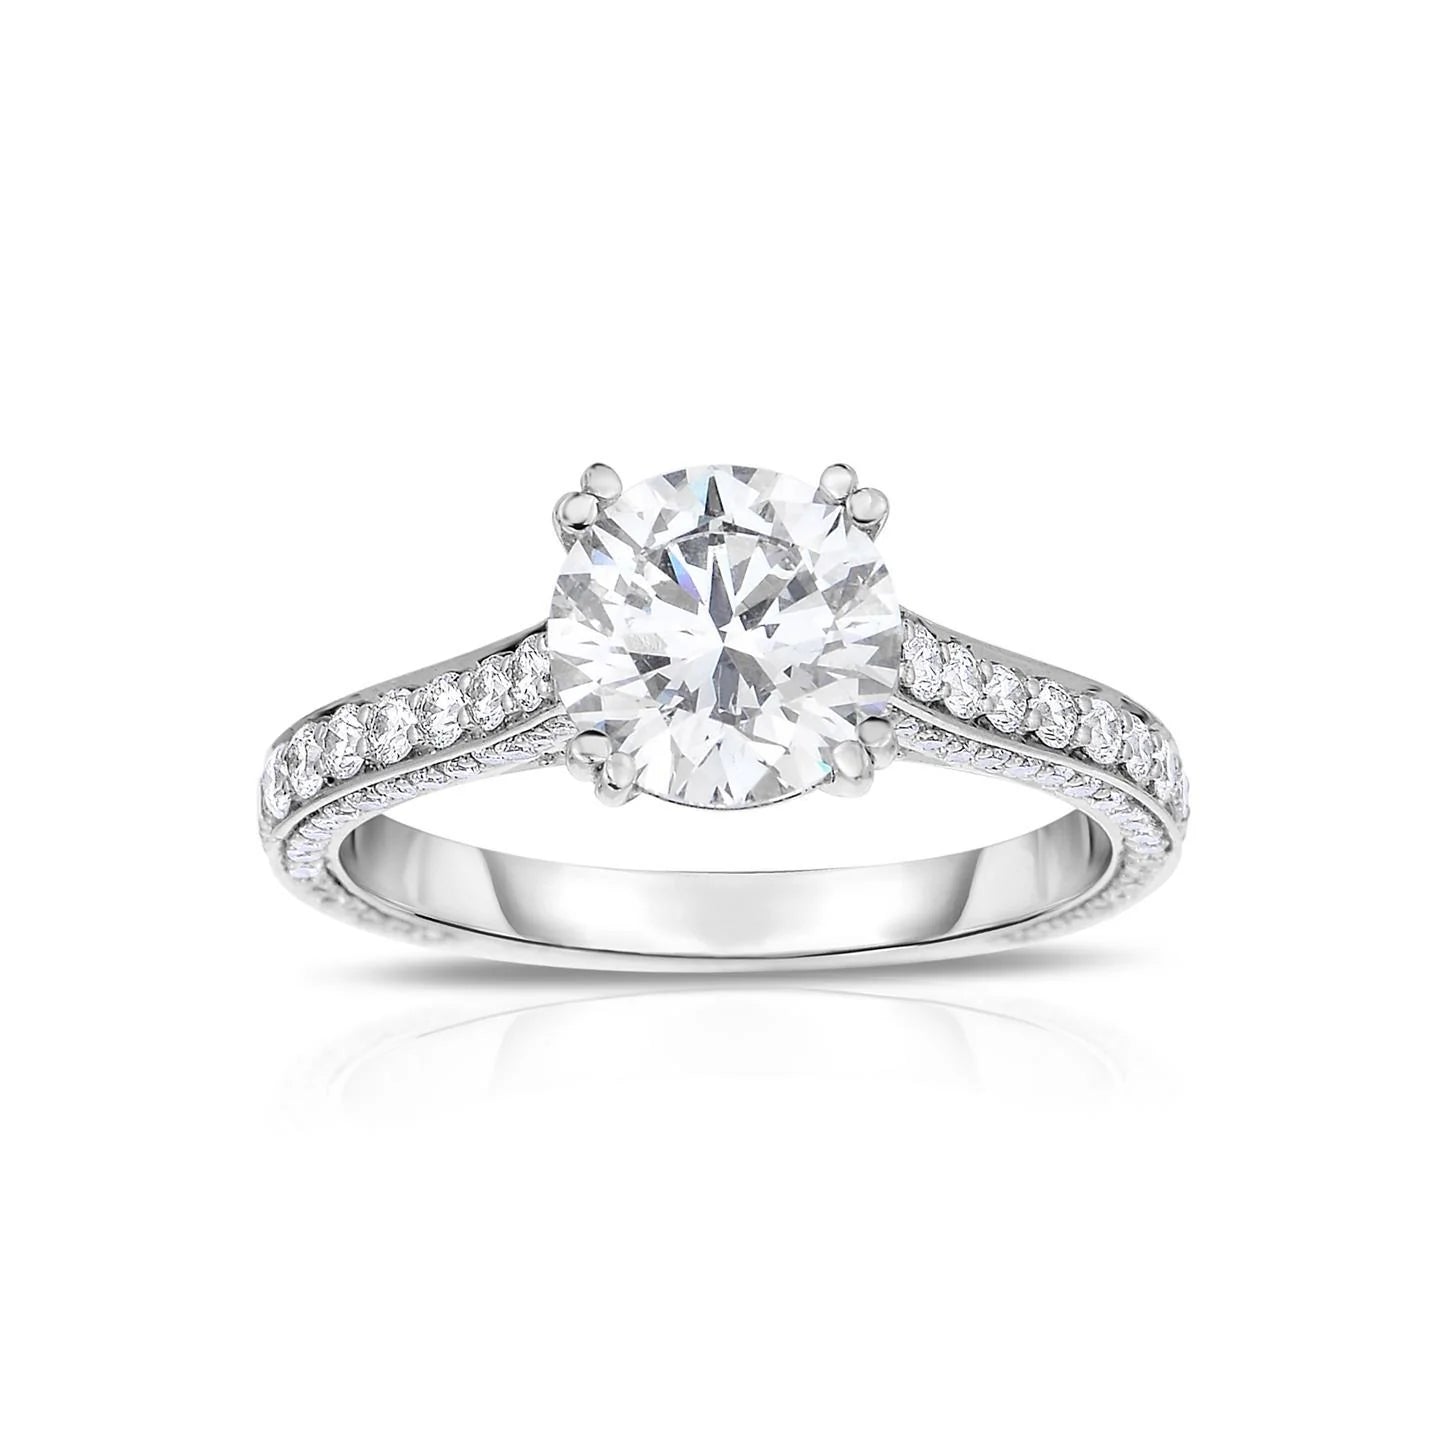 Sparkling Round Cut 3.75 Carats Genuine Diamond Anniversary Ring Prong Set